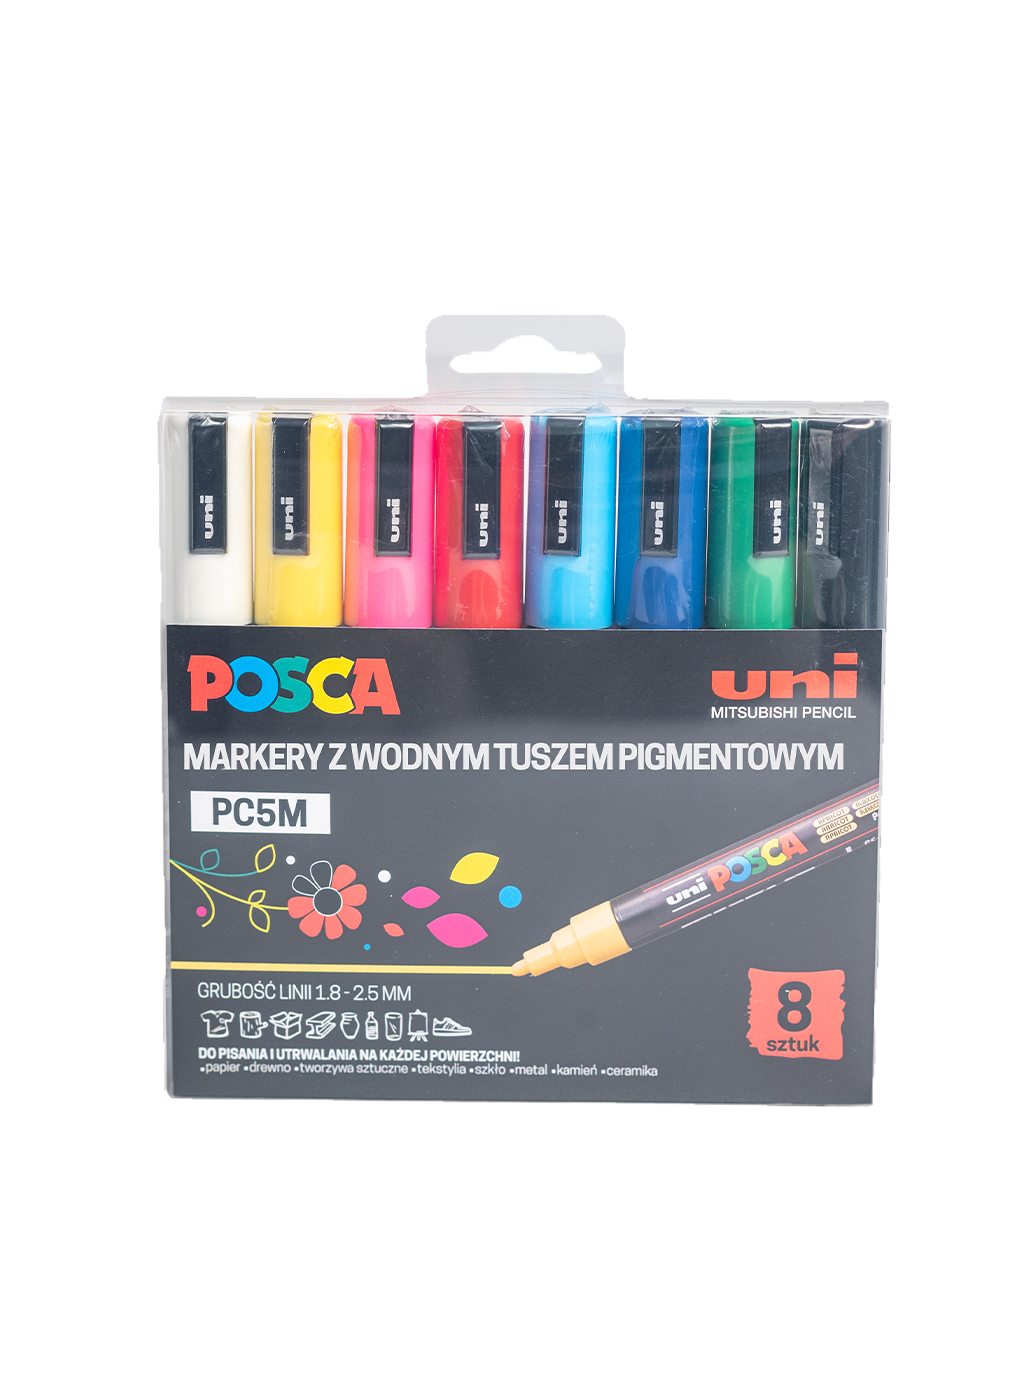 Marcadores de pintura POSCA PC5M